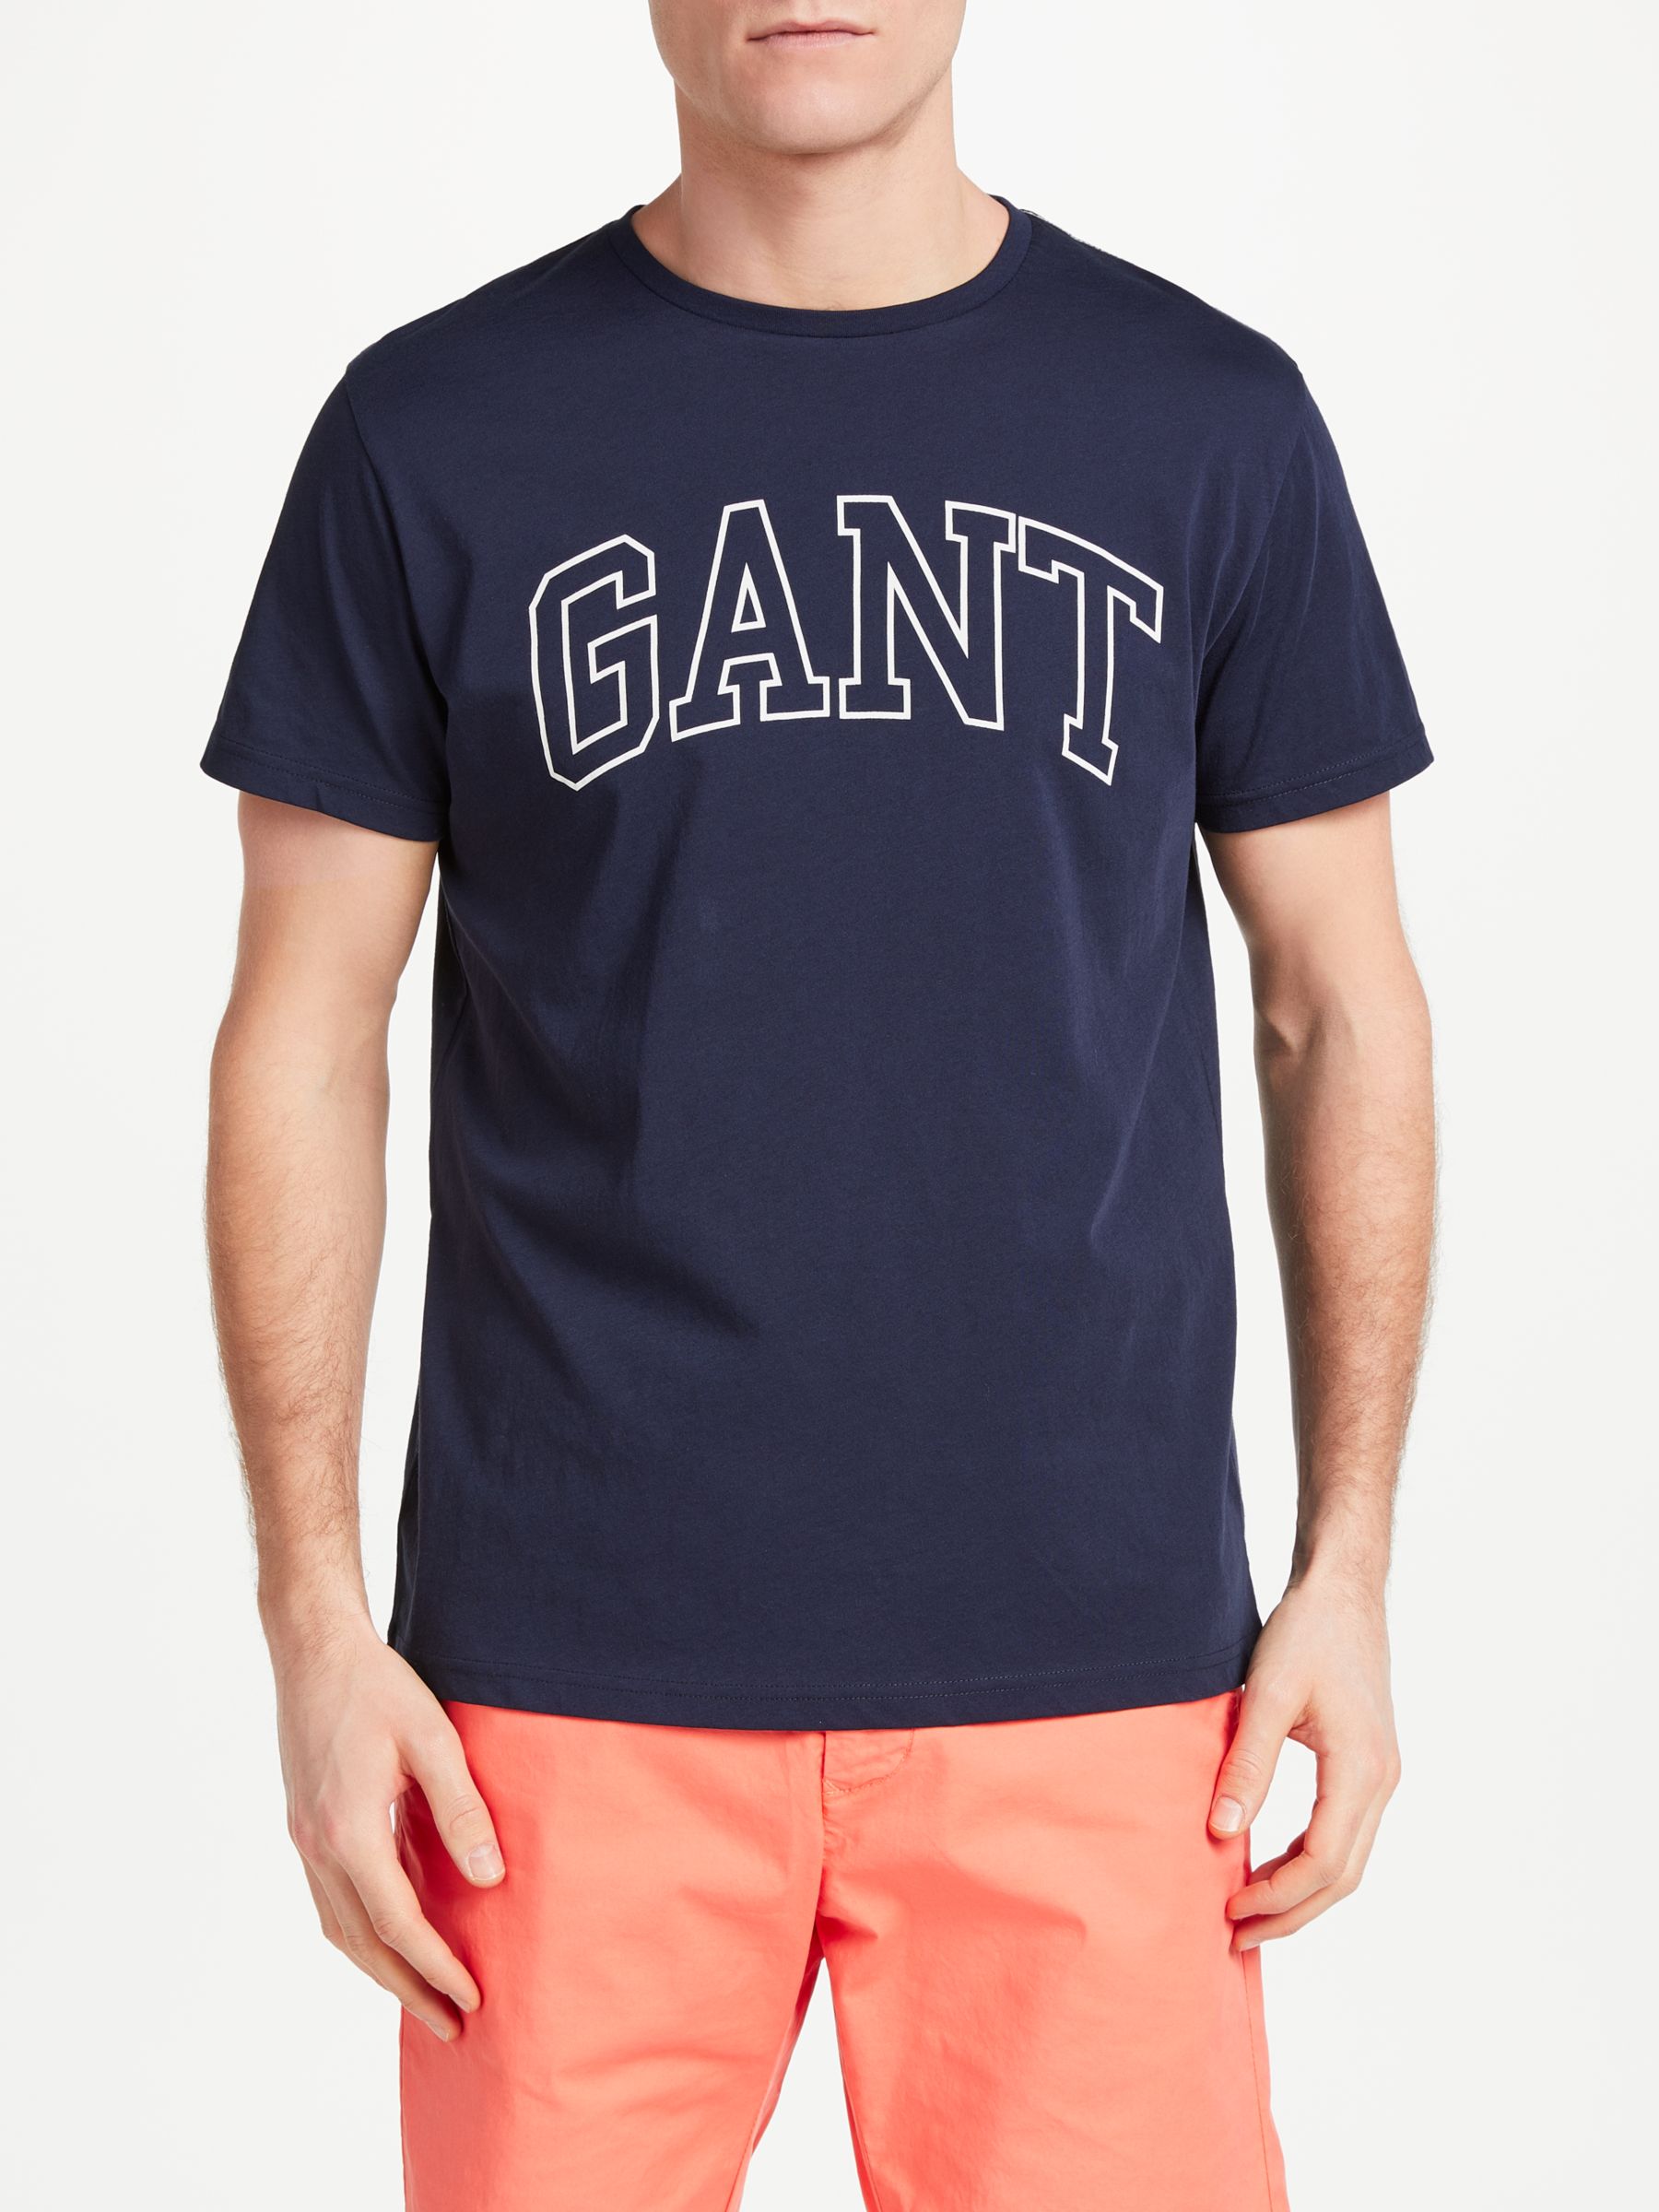 Gant Outline Print Cotton T-Shirt, Navy, XL